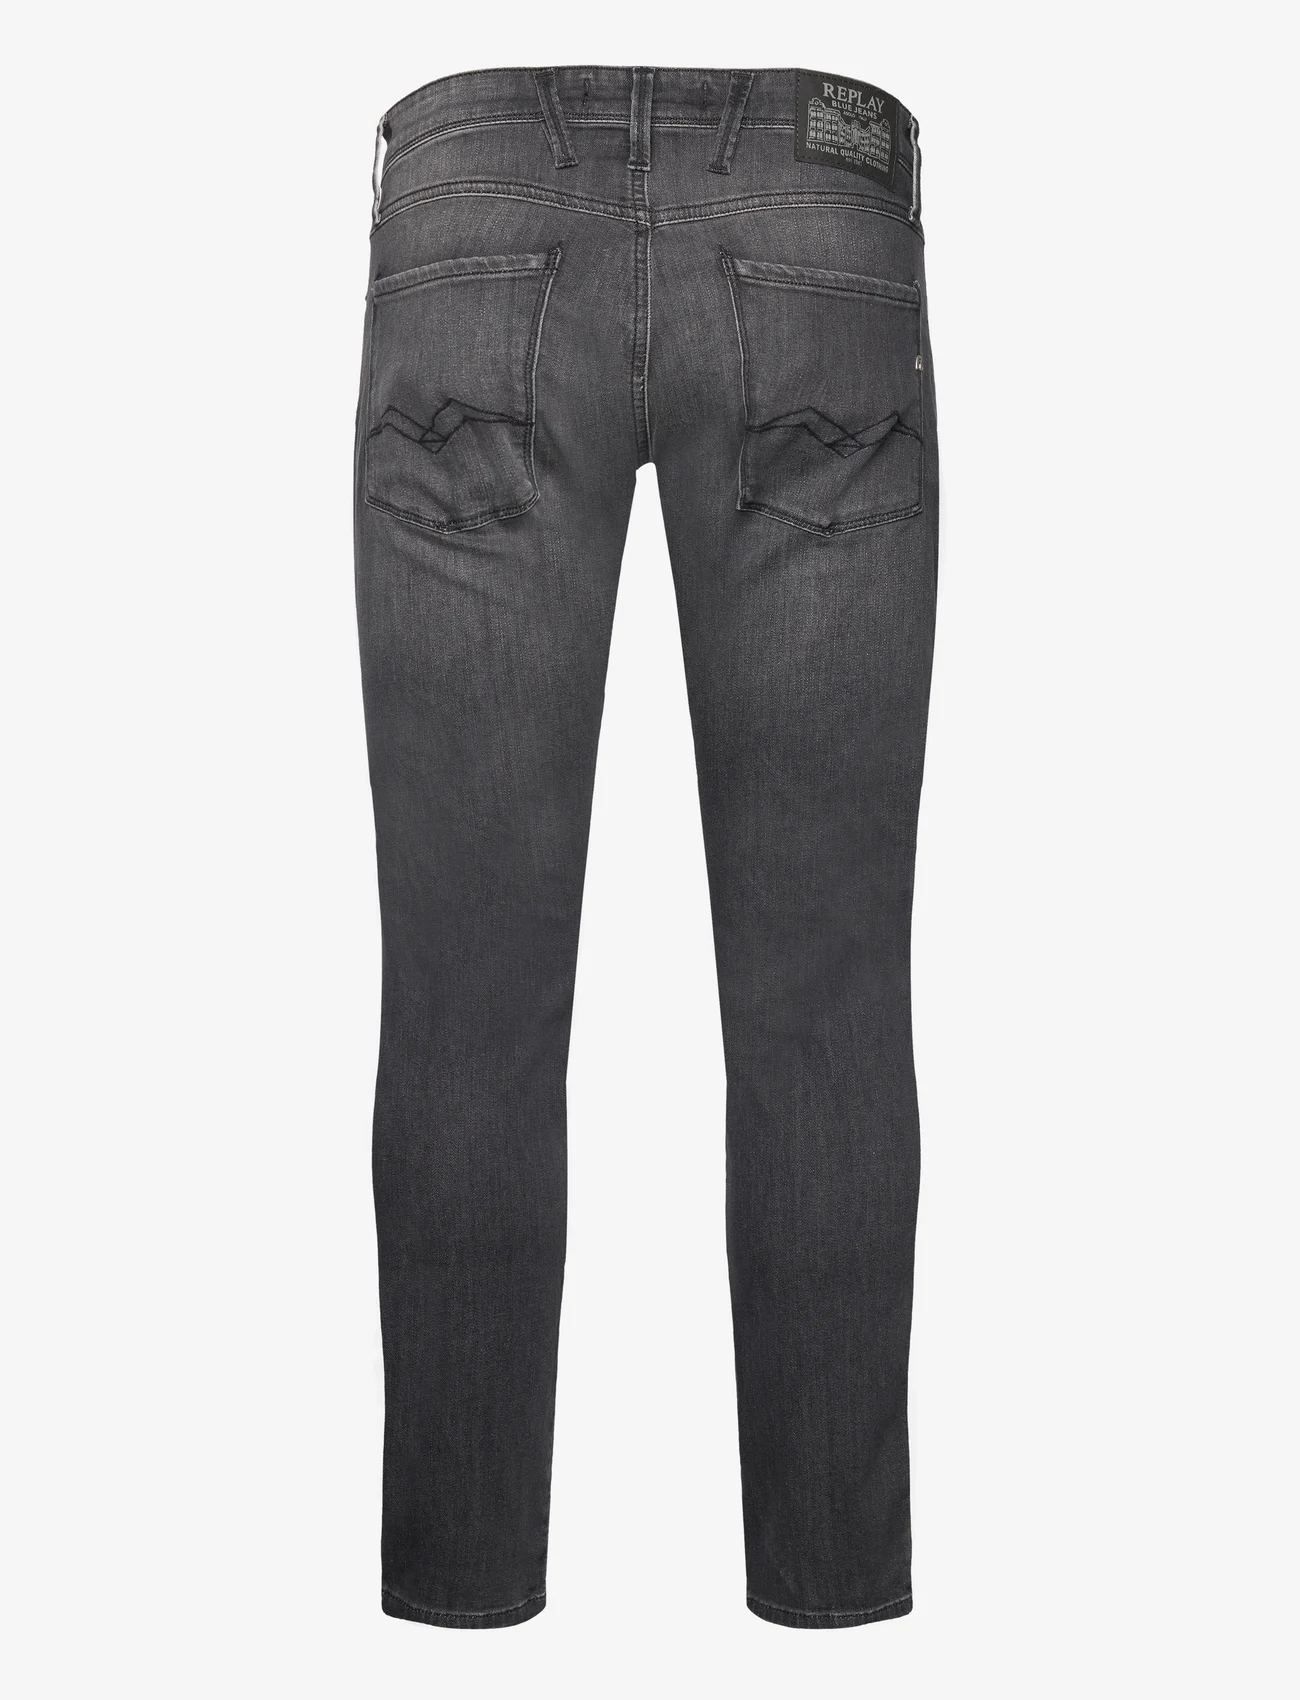 Replay - ANBASS Trousers SLIM 99 Denim - slim fit jeans - grey - 1